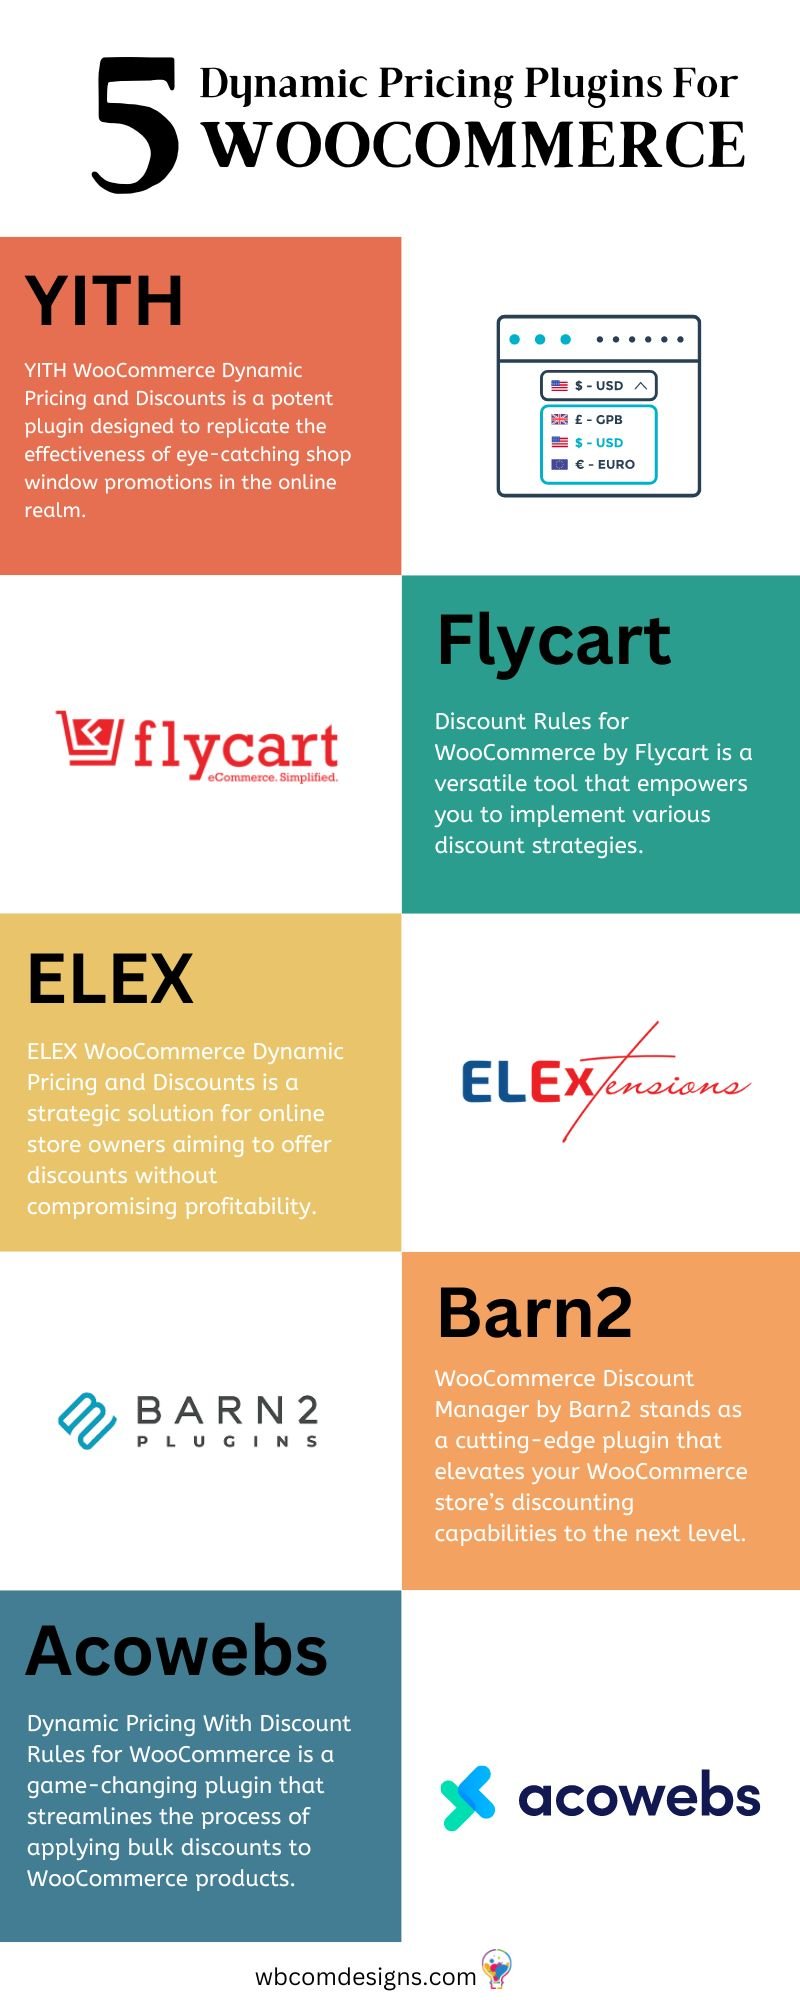 WooCommerce Dynamic Pricing plugins